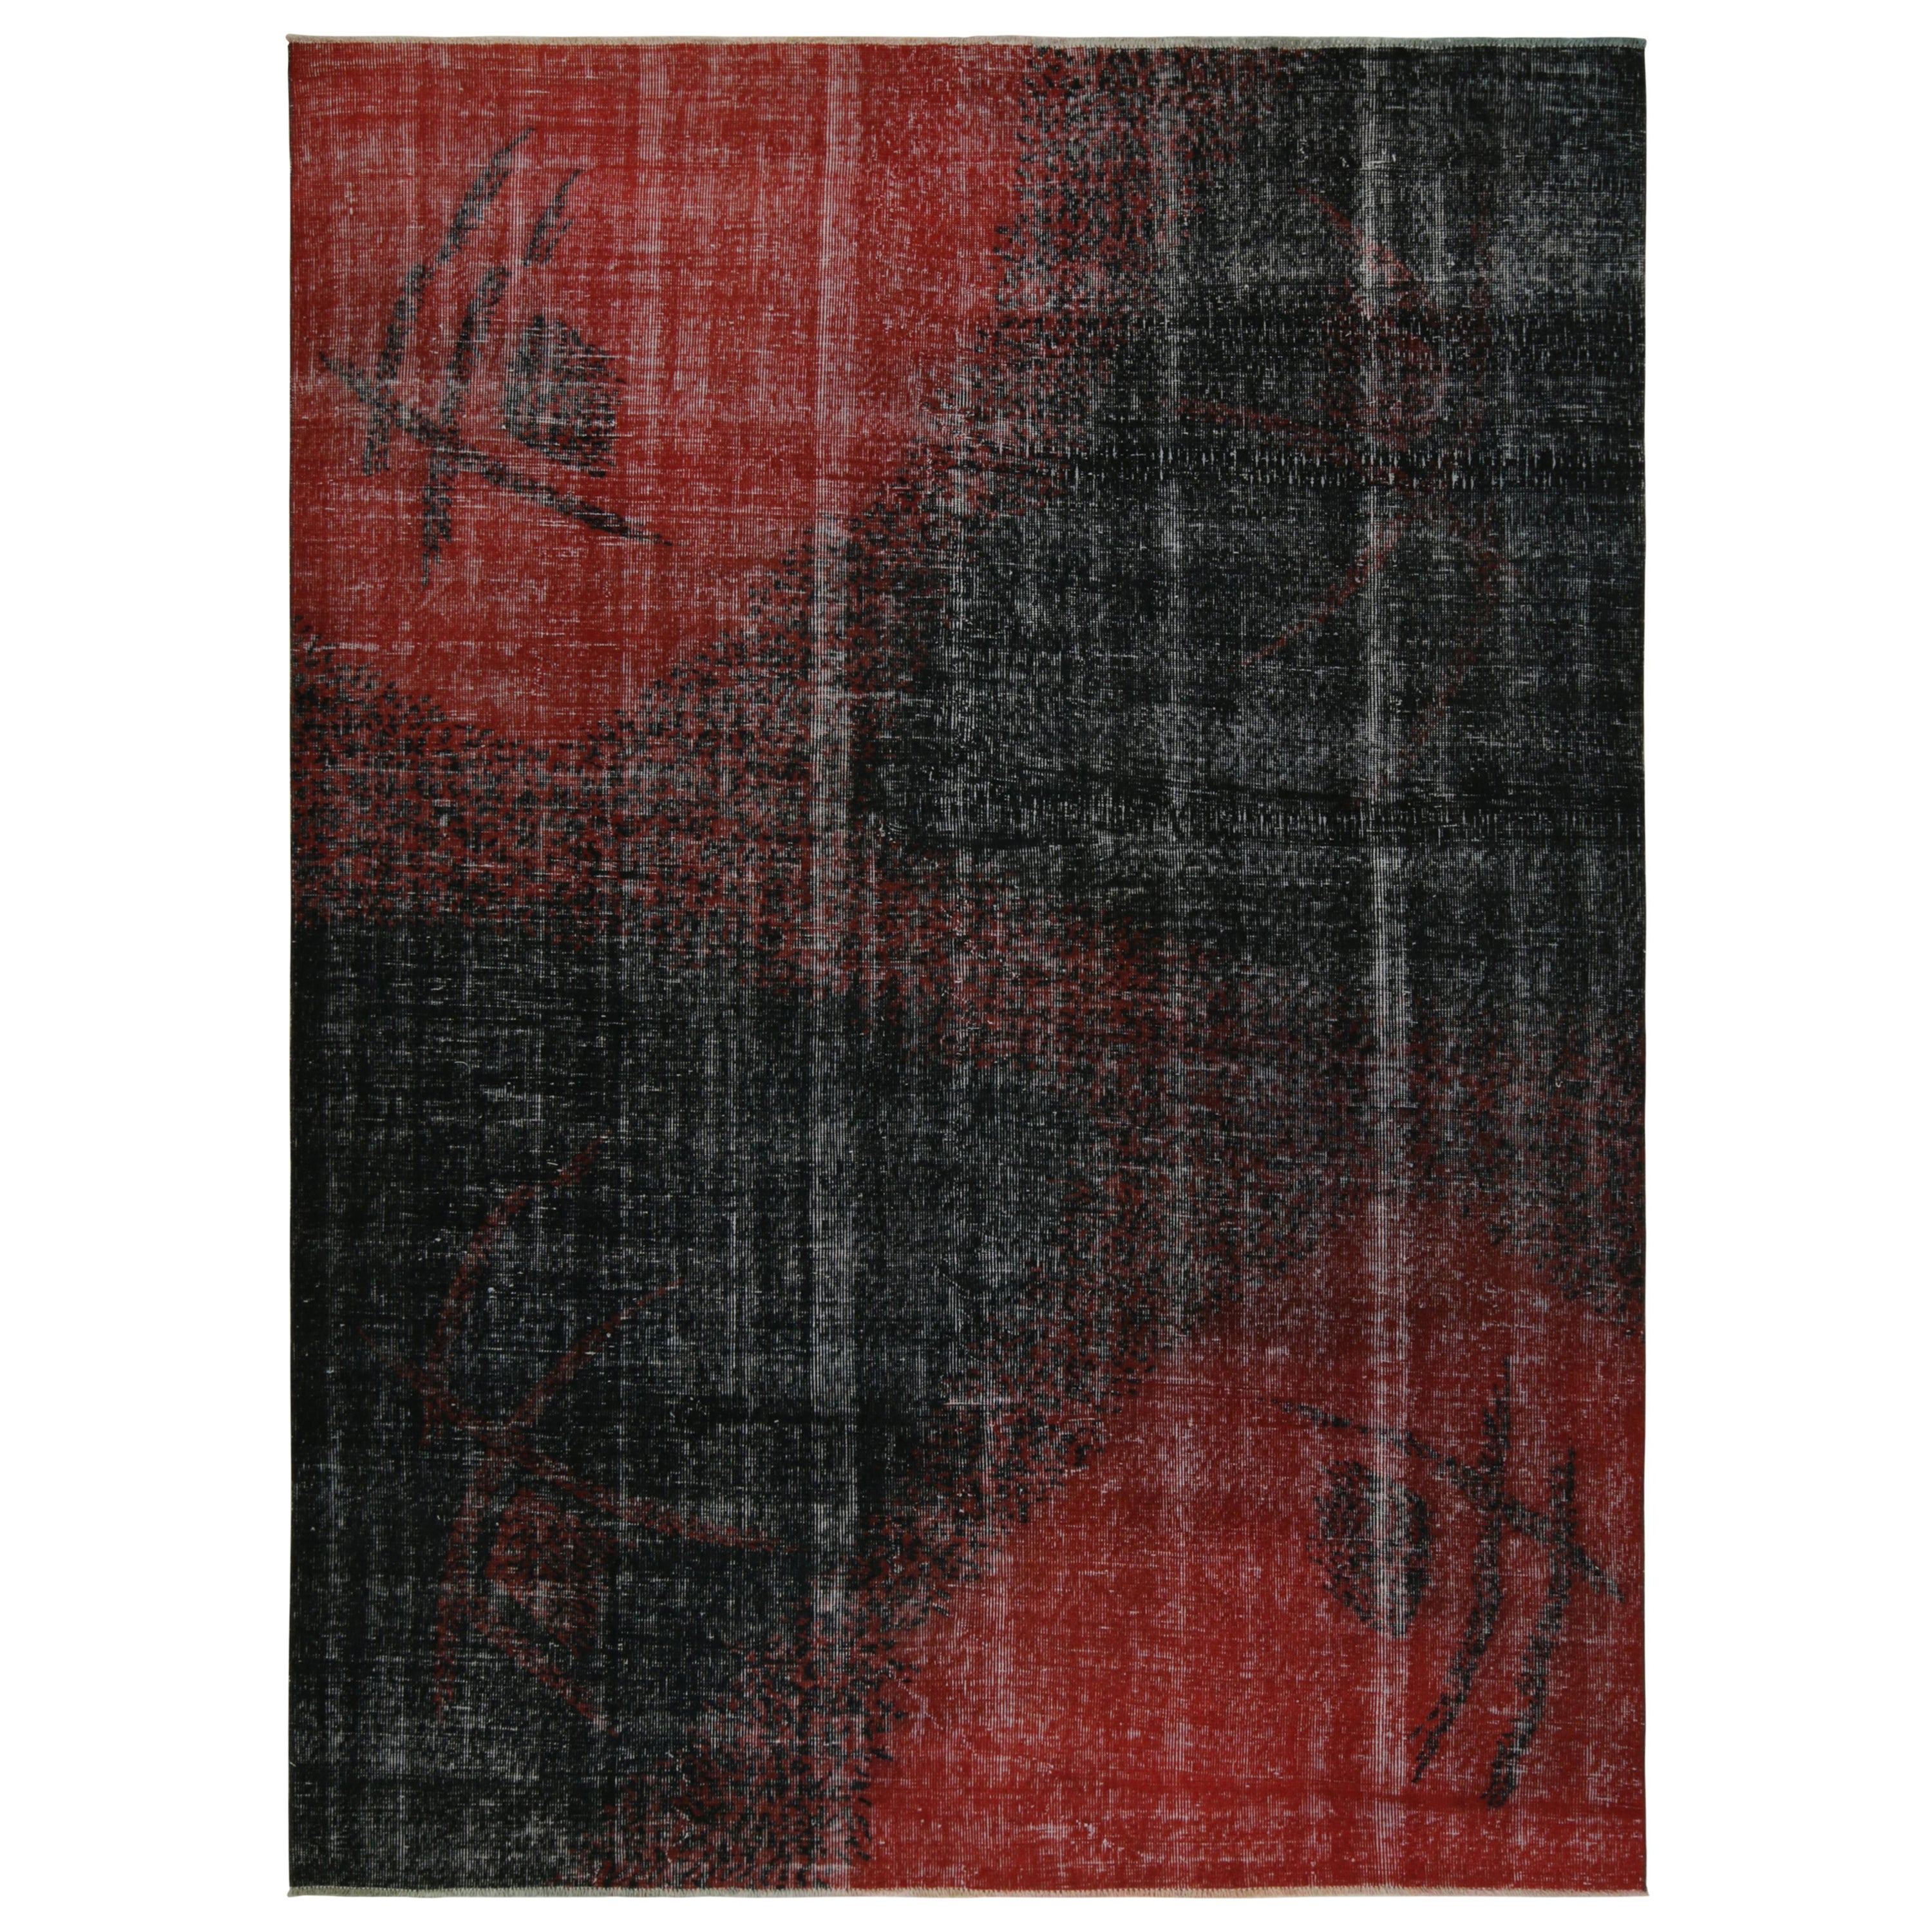 Vintage Distressed Zeki Müren Rug in Red and Black Deco Pattern, by Rug & Kilim For Sale